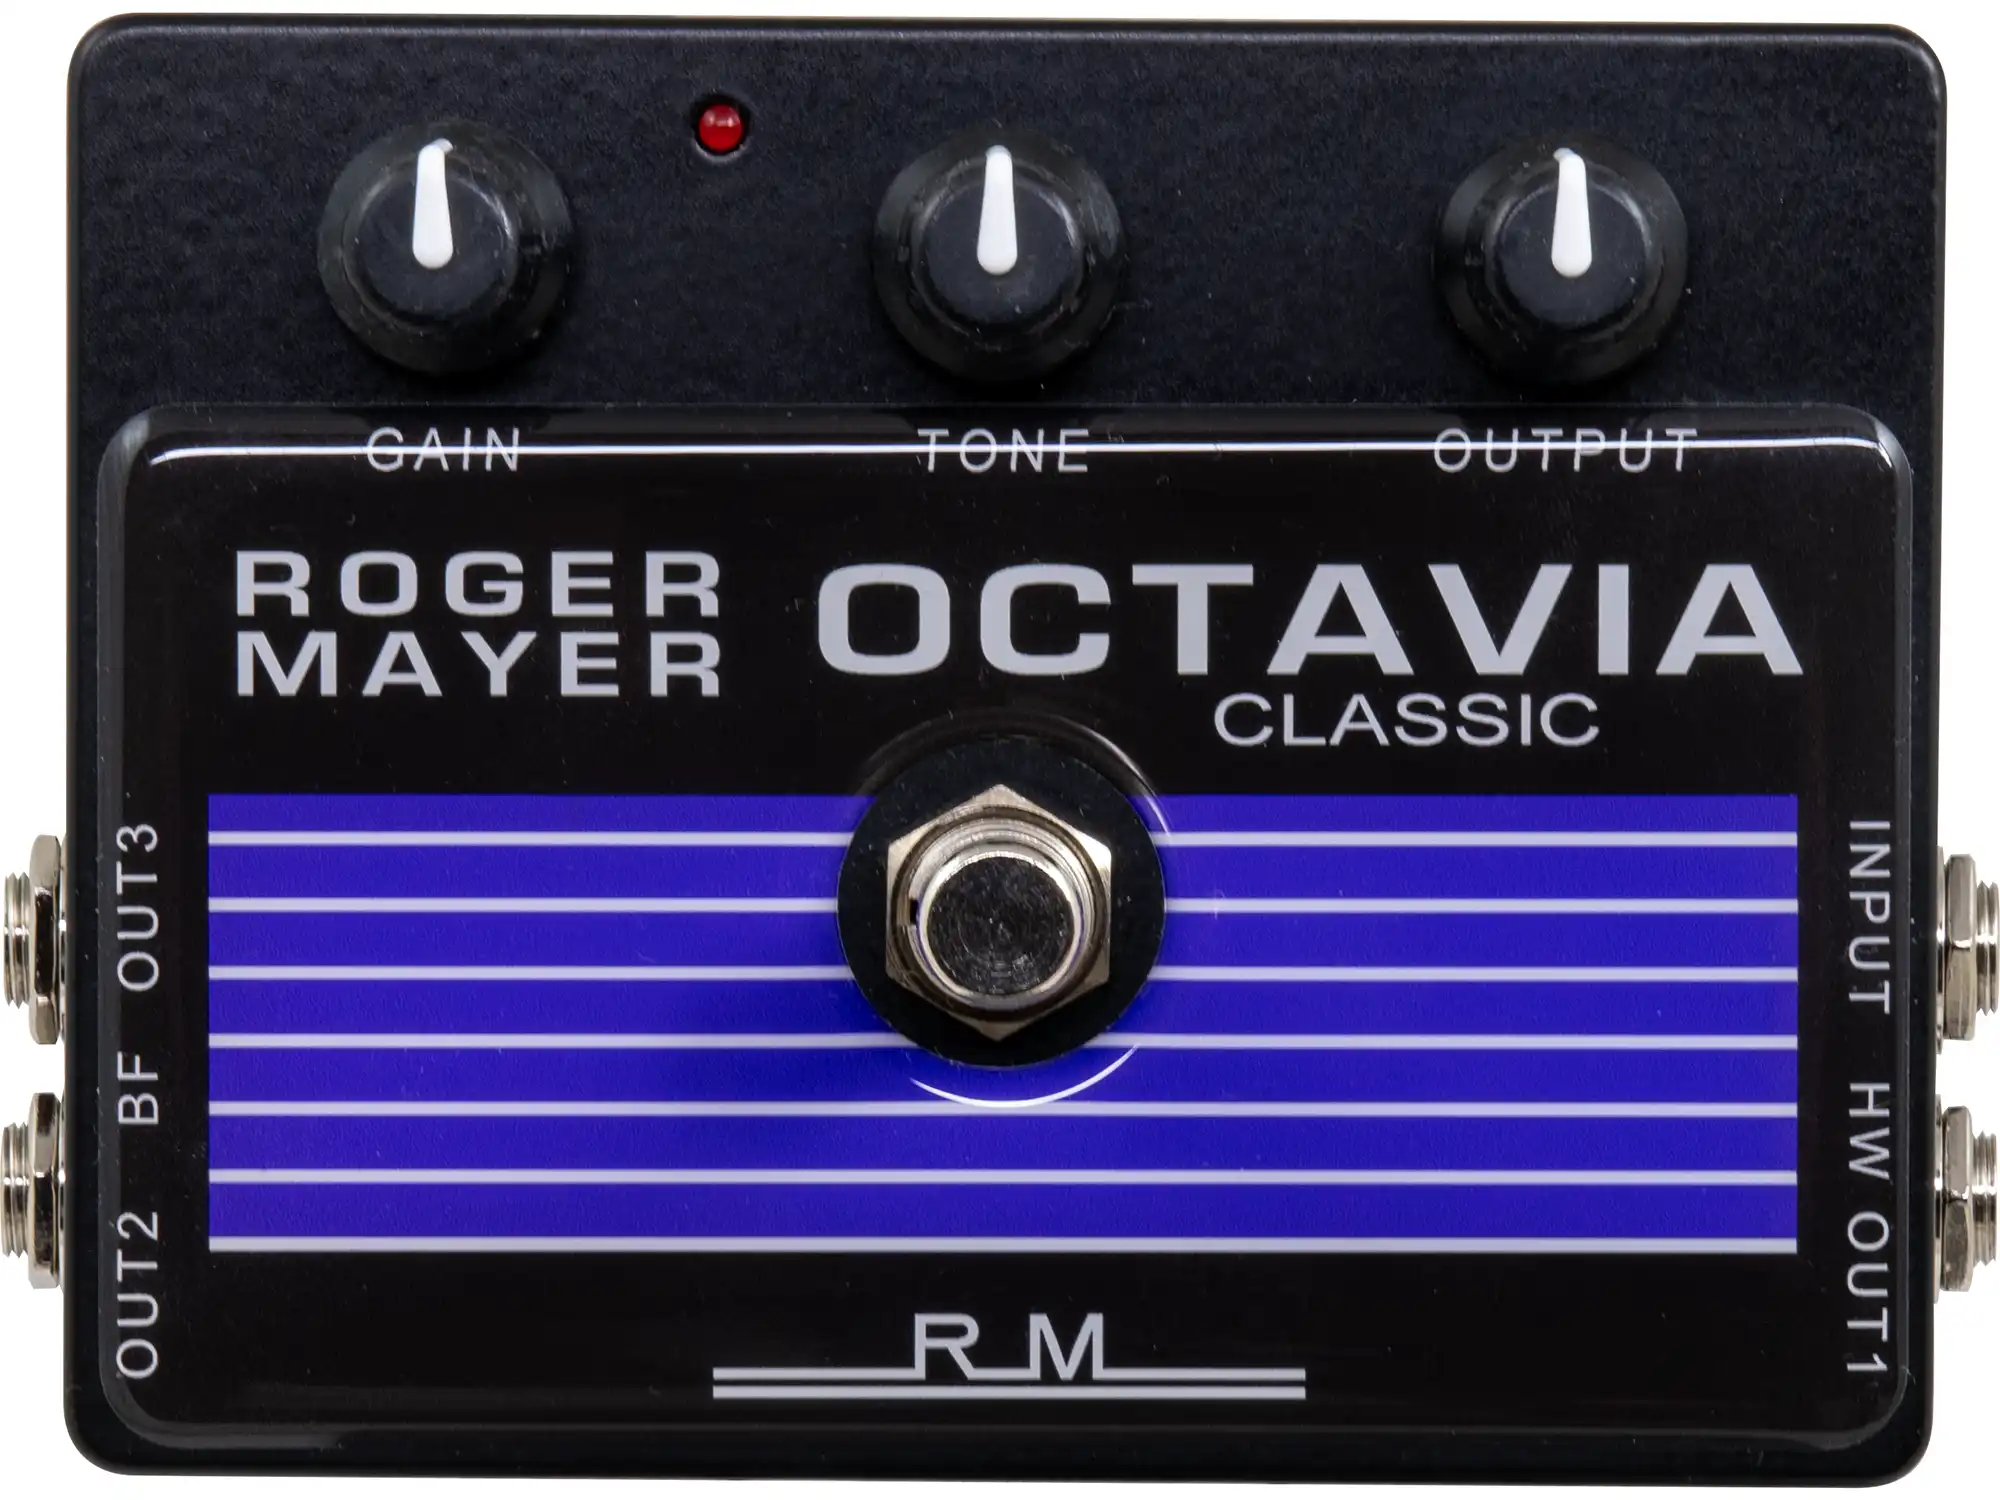 roger mayer octavia classic image